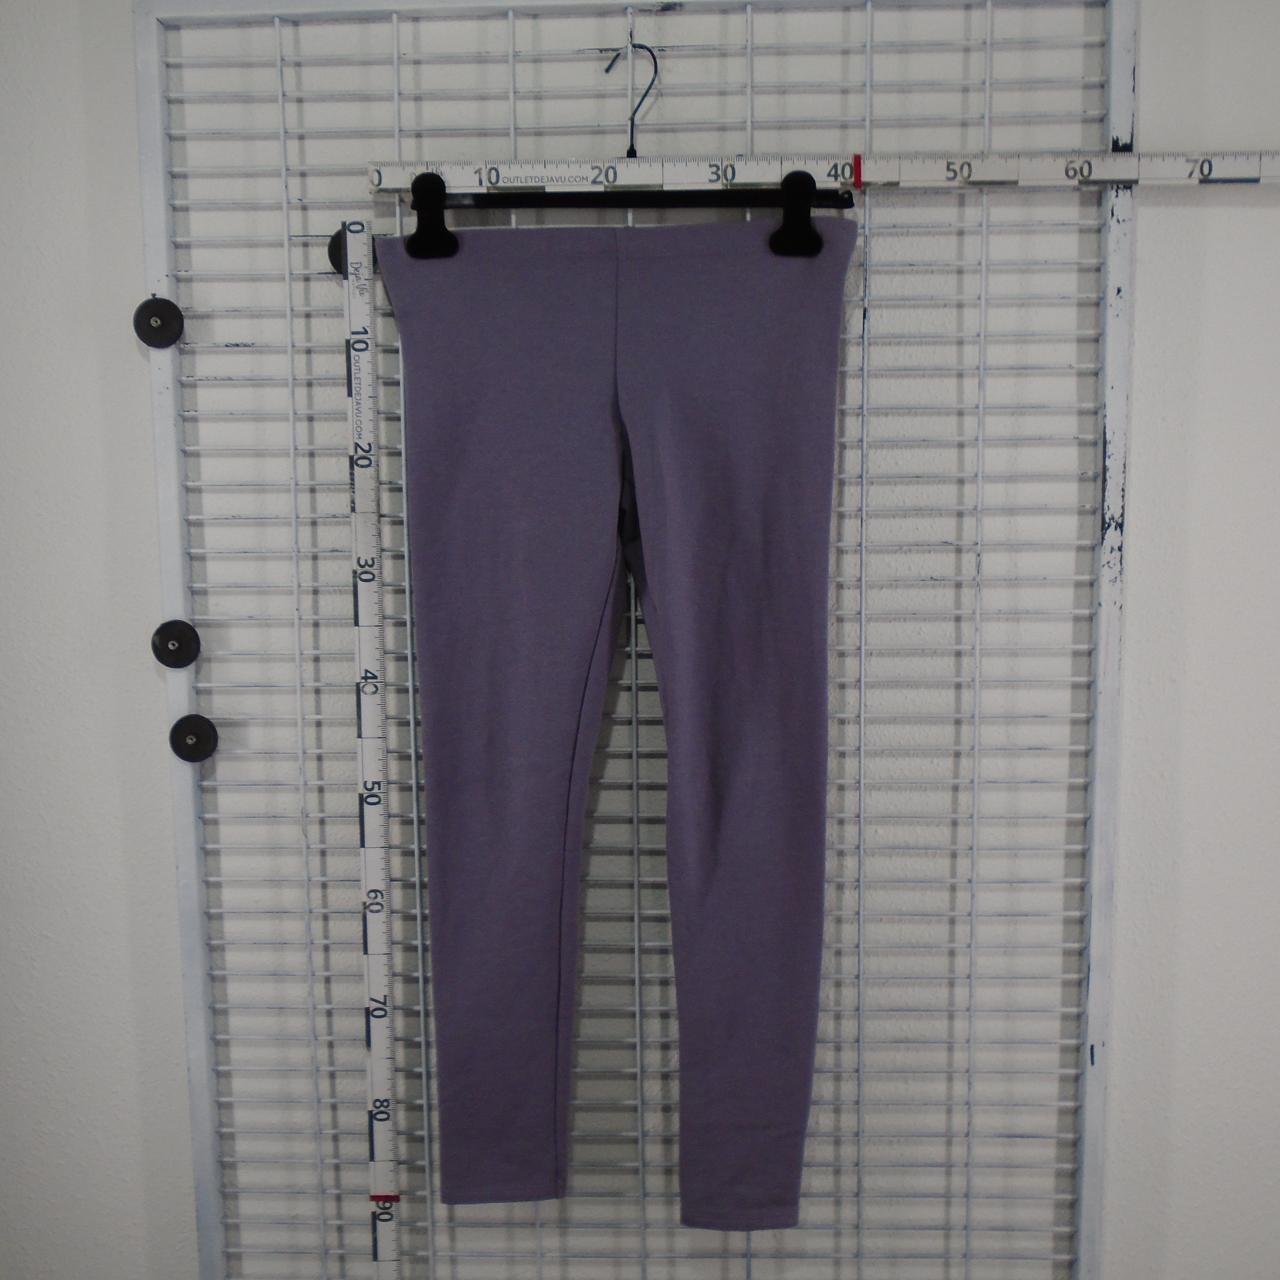 Pantalones Mujer Tex.  Violeta.  S. Usado.  Muy bien